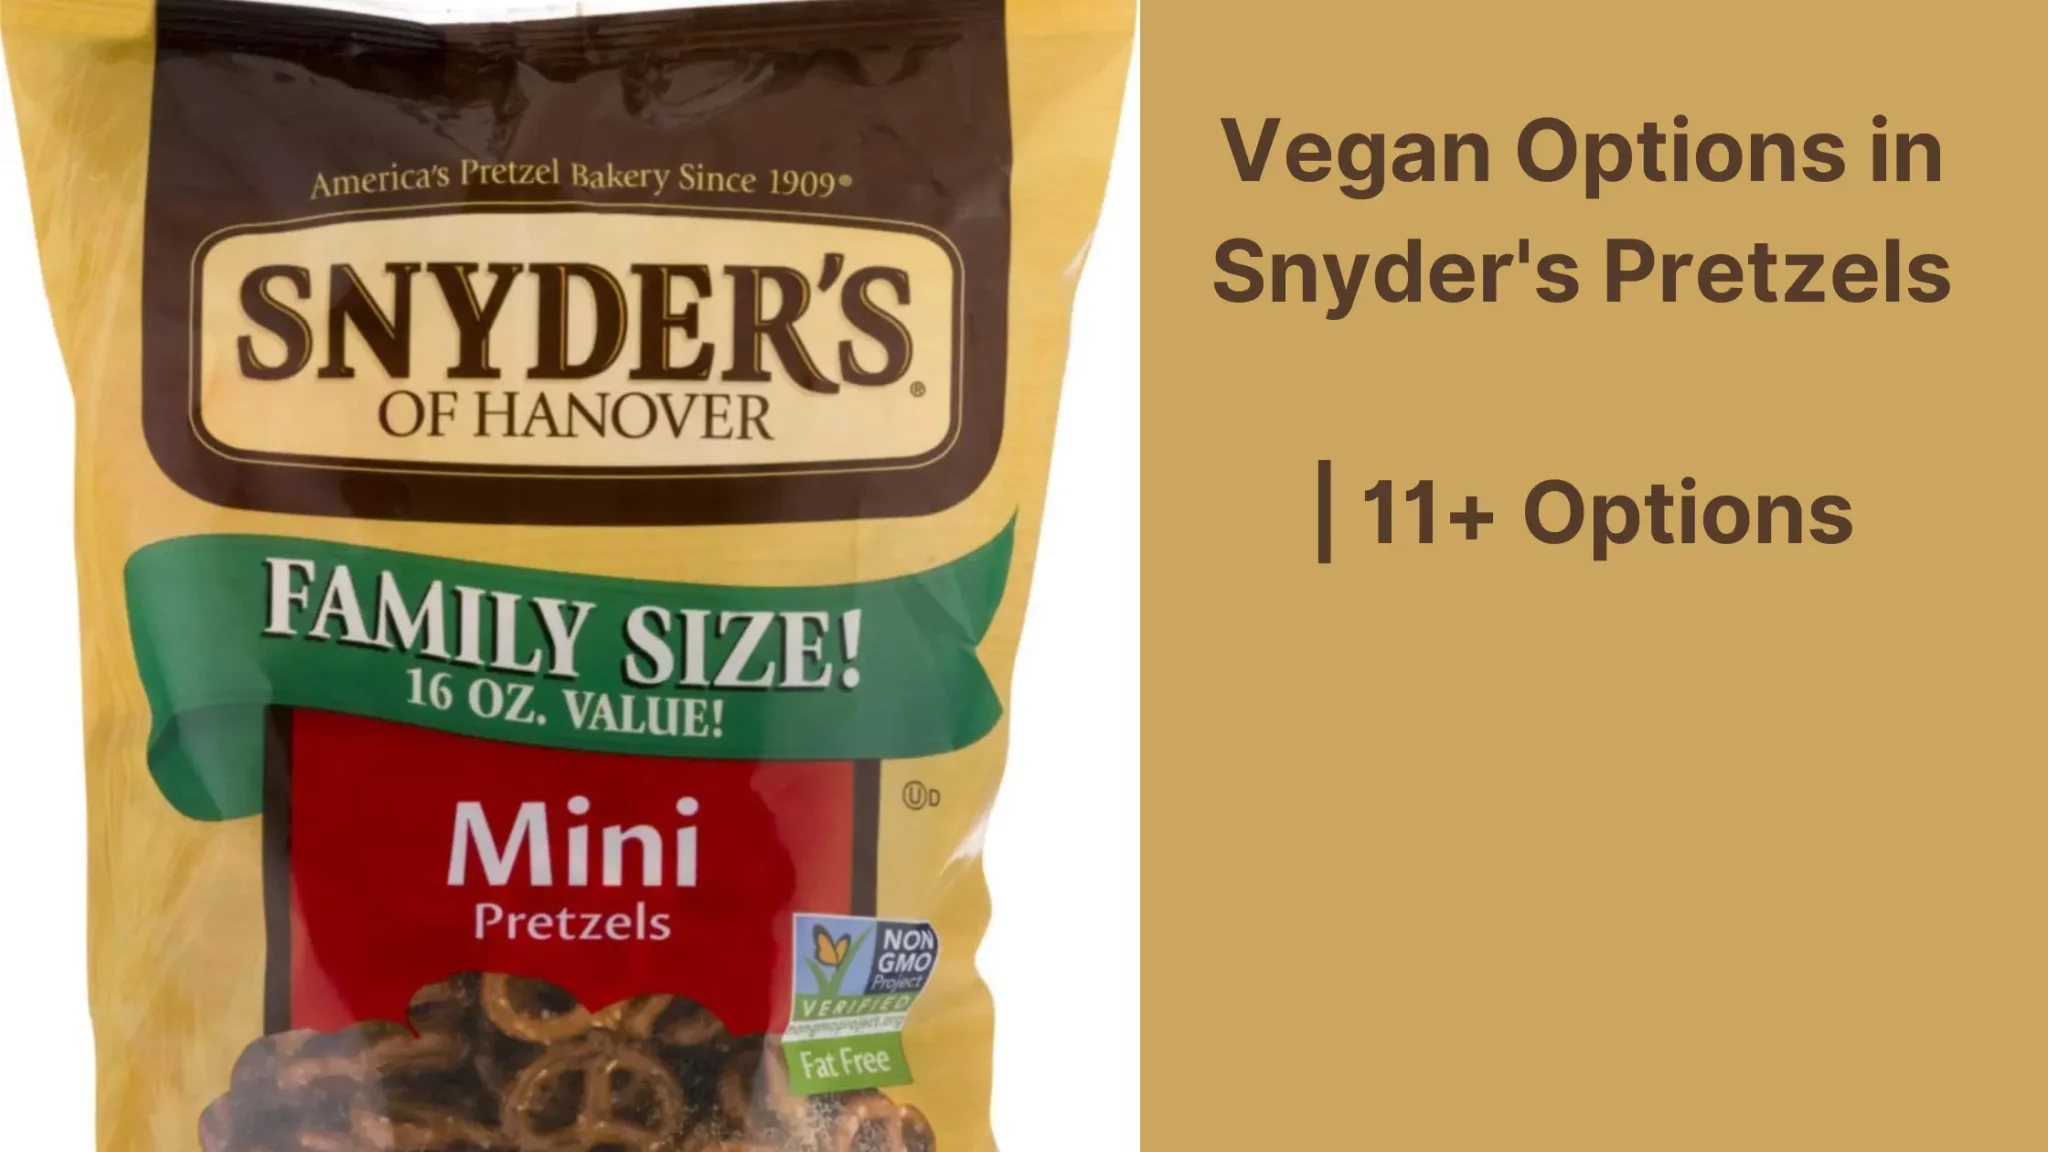 Vegan Options in Snyder's Pretzels